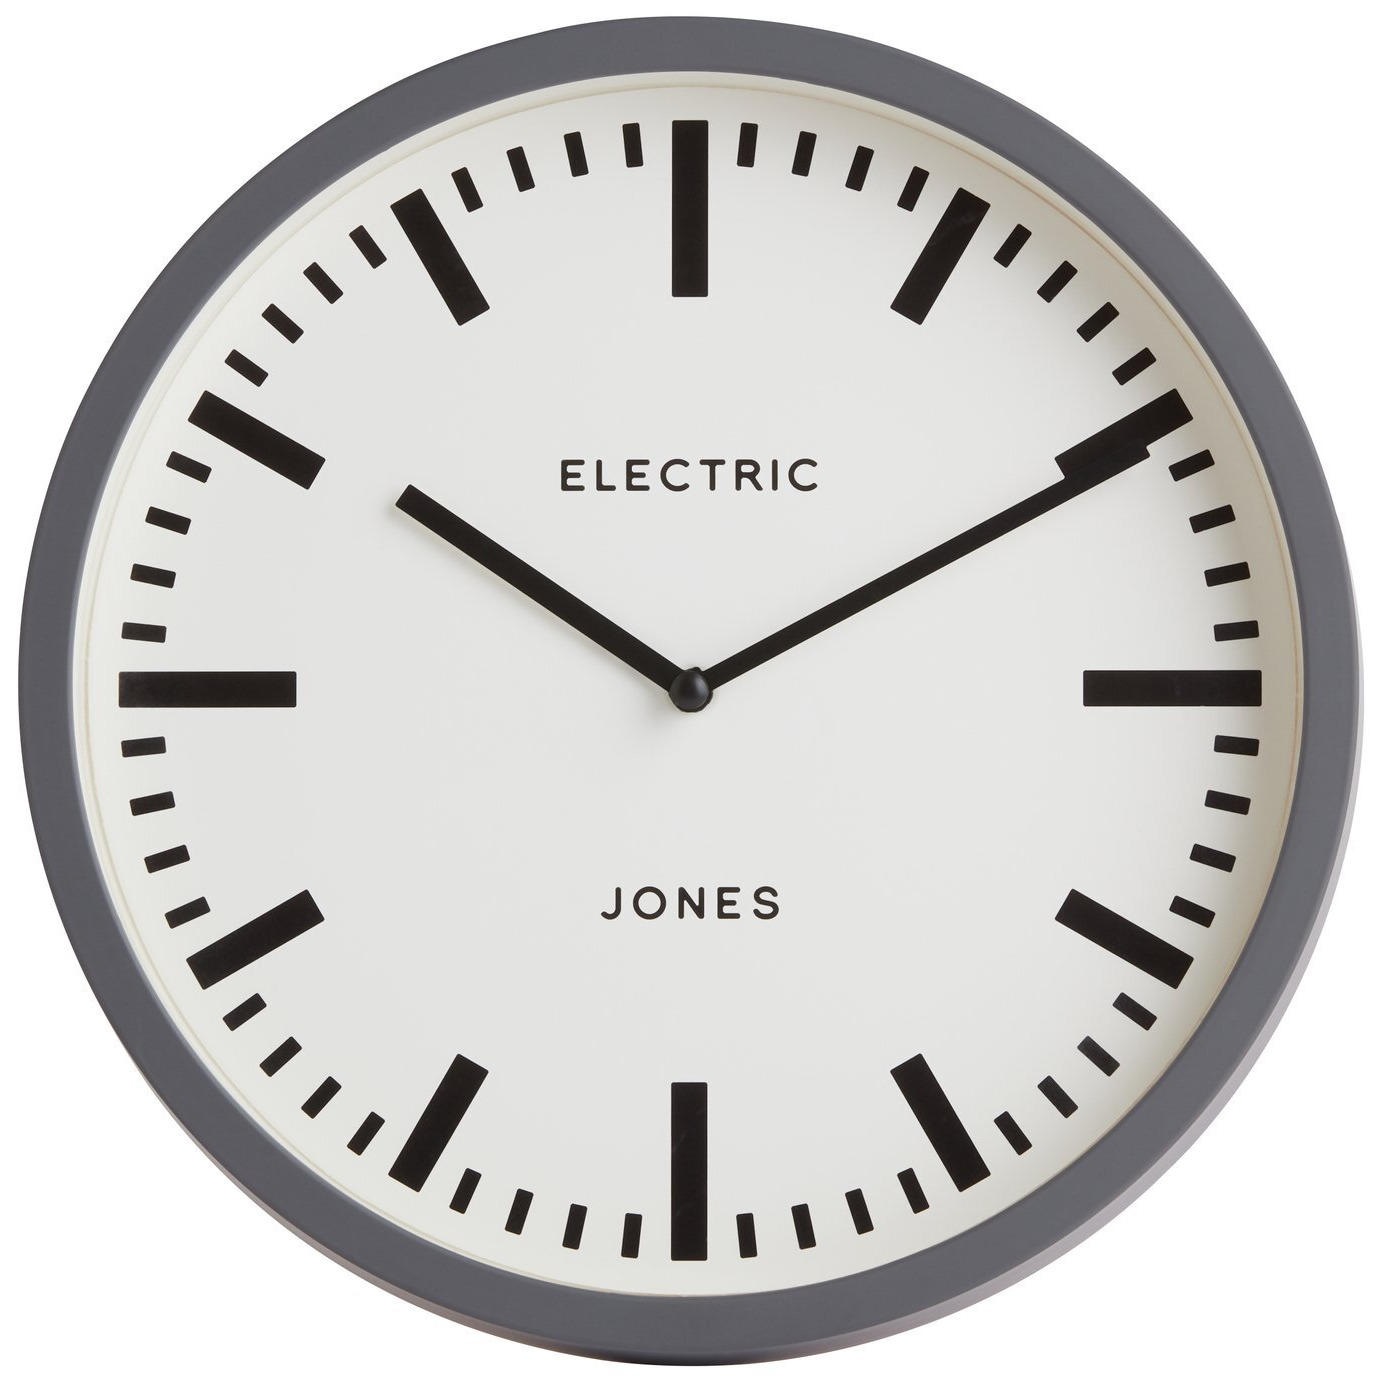 Jones Electric Wall Clock - Grey - image 1